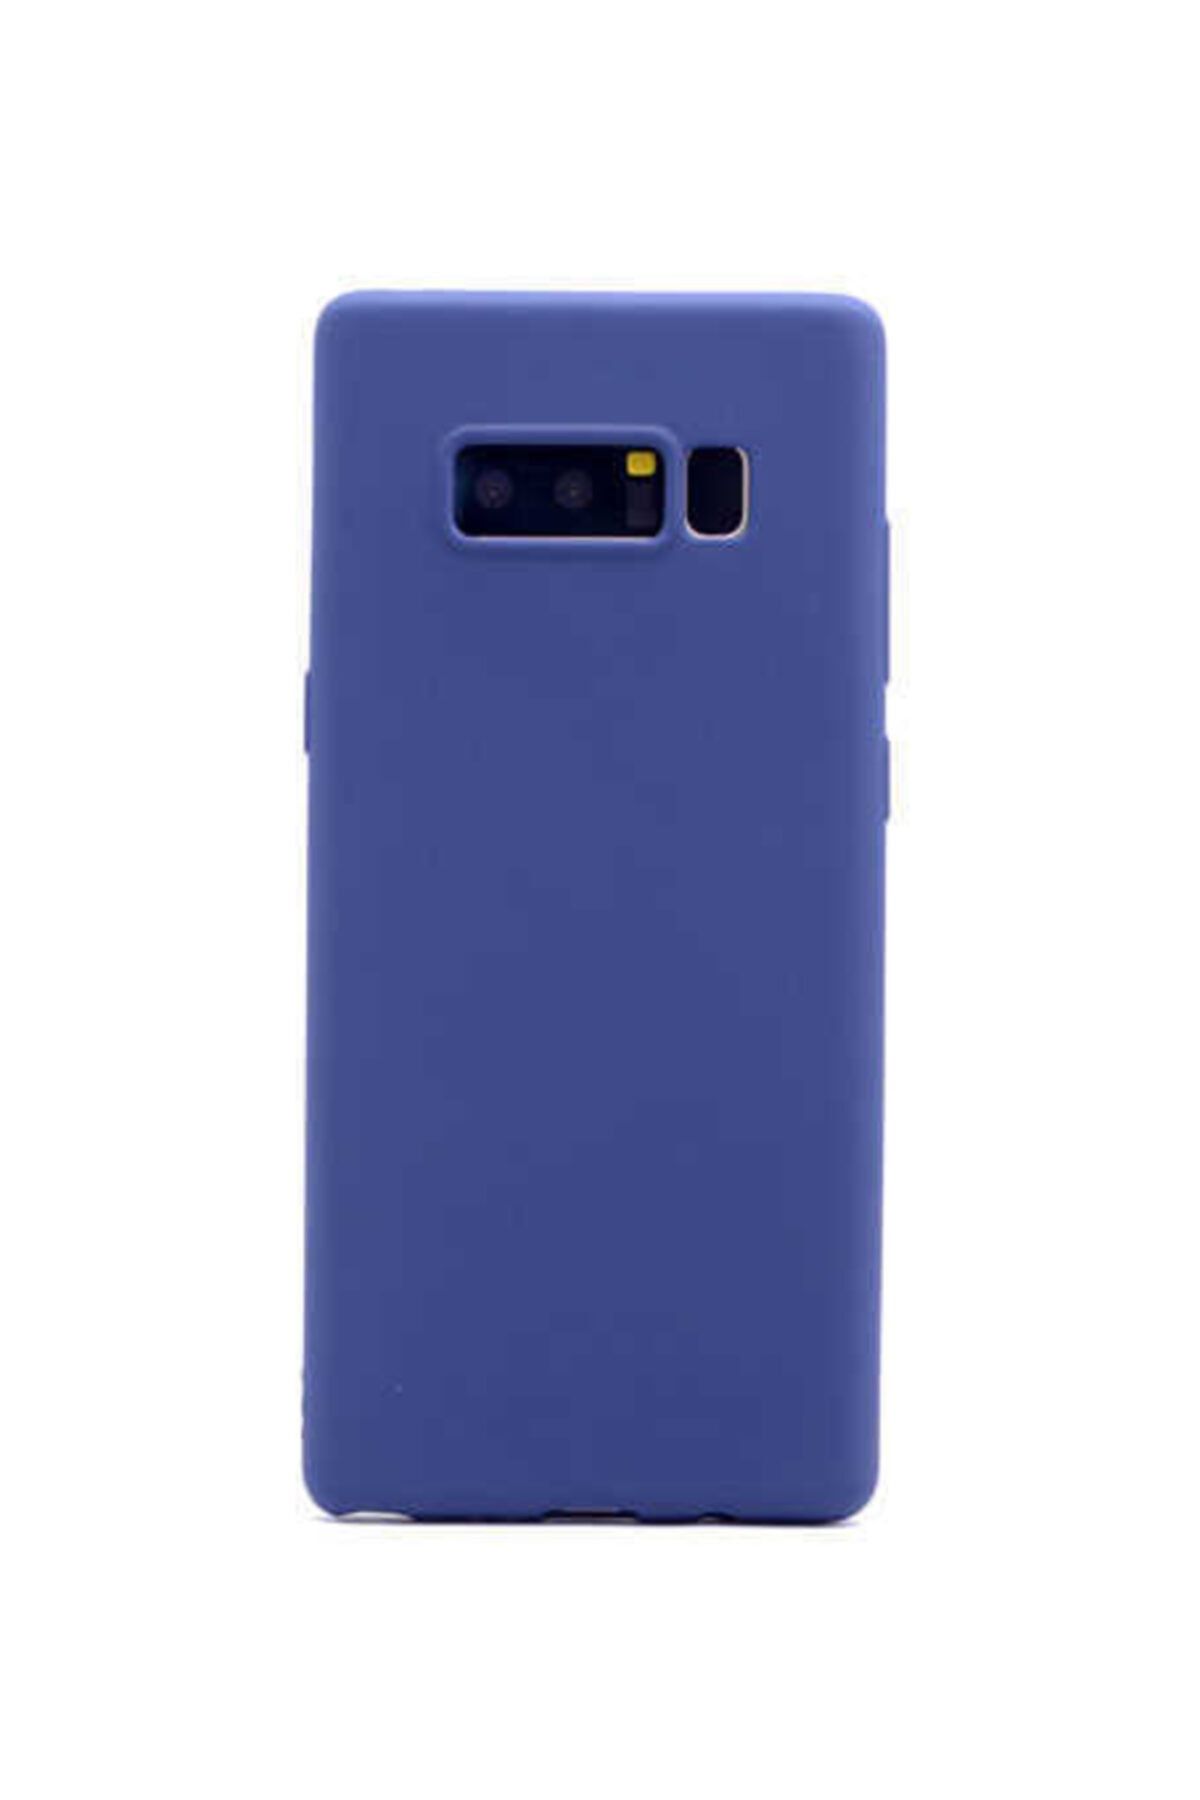 İncisoft Galaxy Note 8 Uyumlu Ince Yumuşak Soft Tasarım Renkli Silikon Kılıf